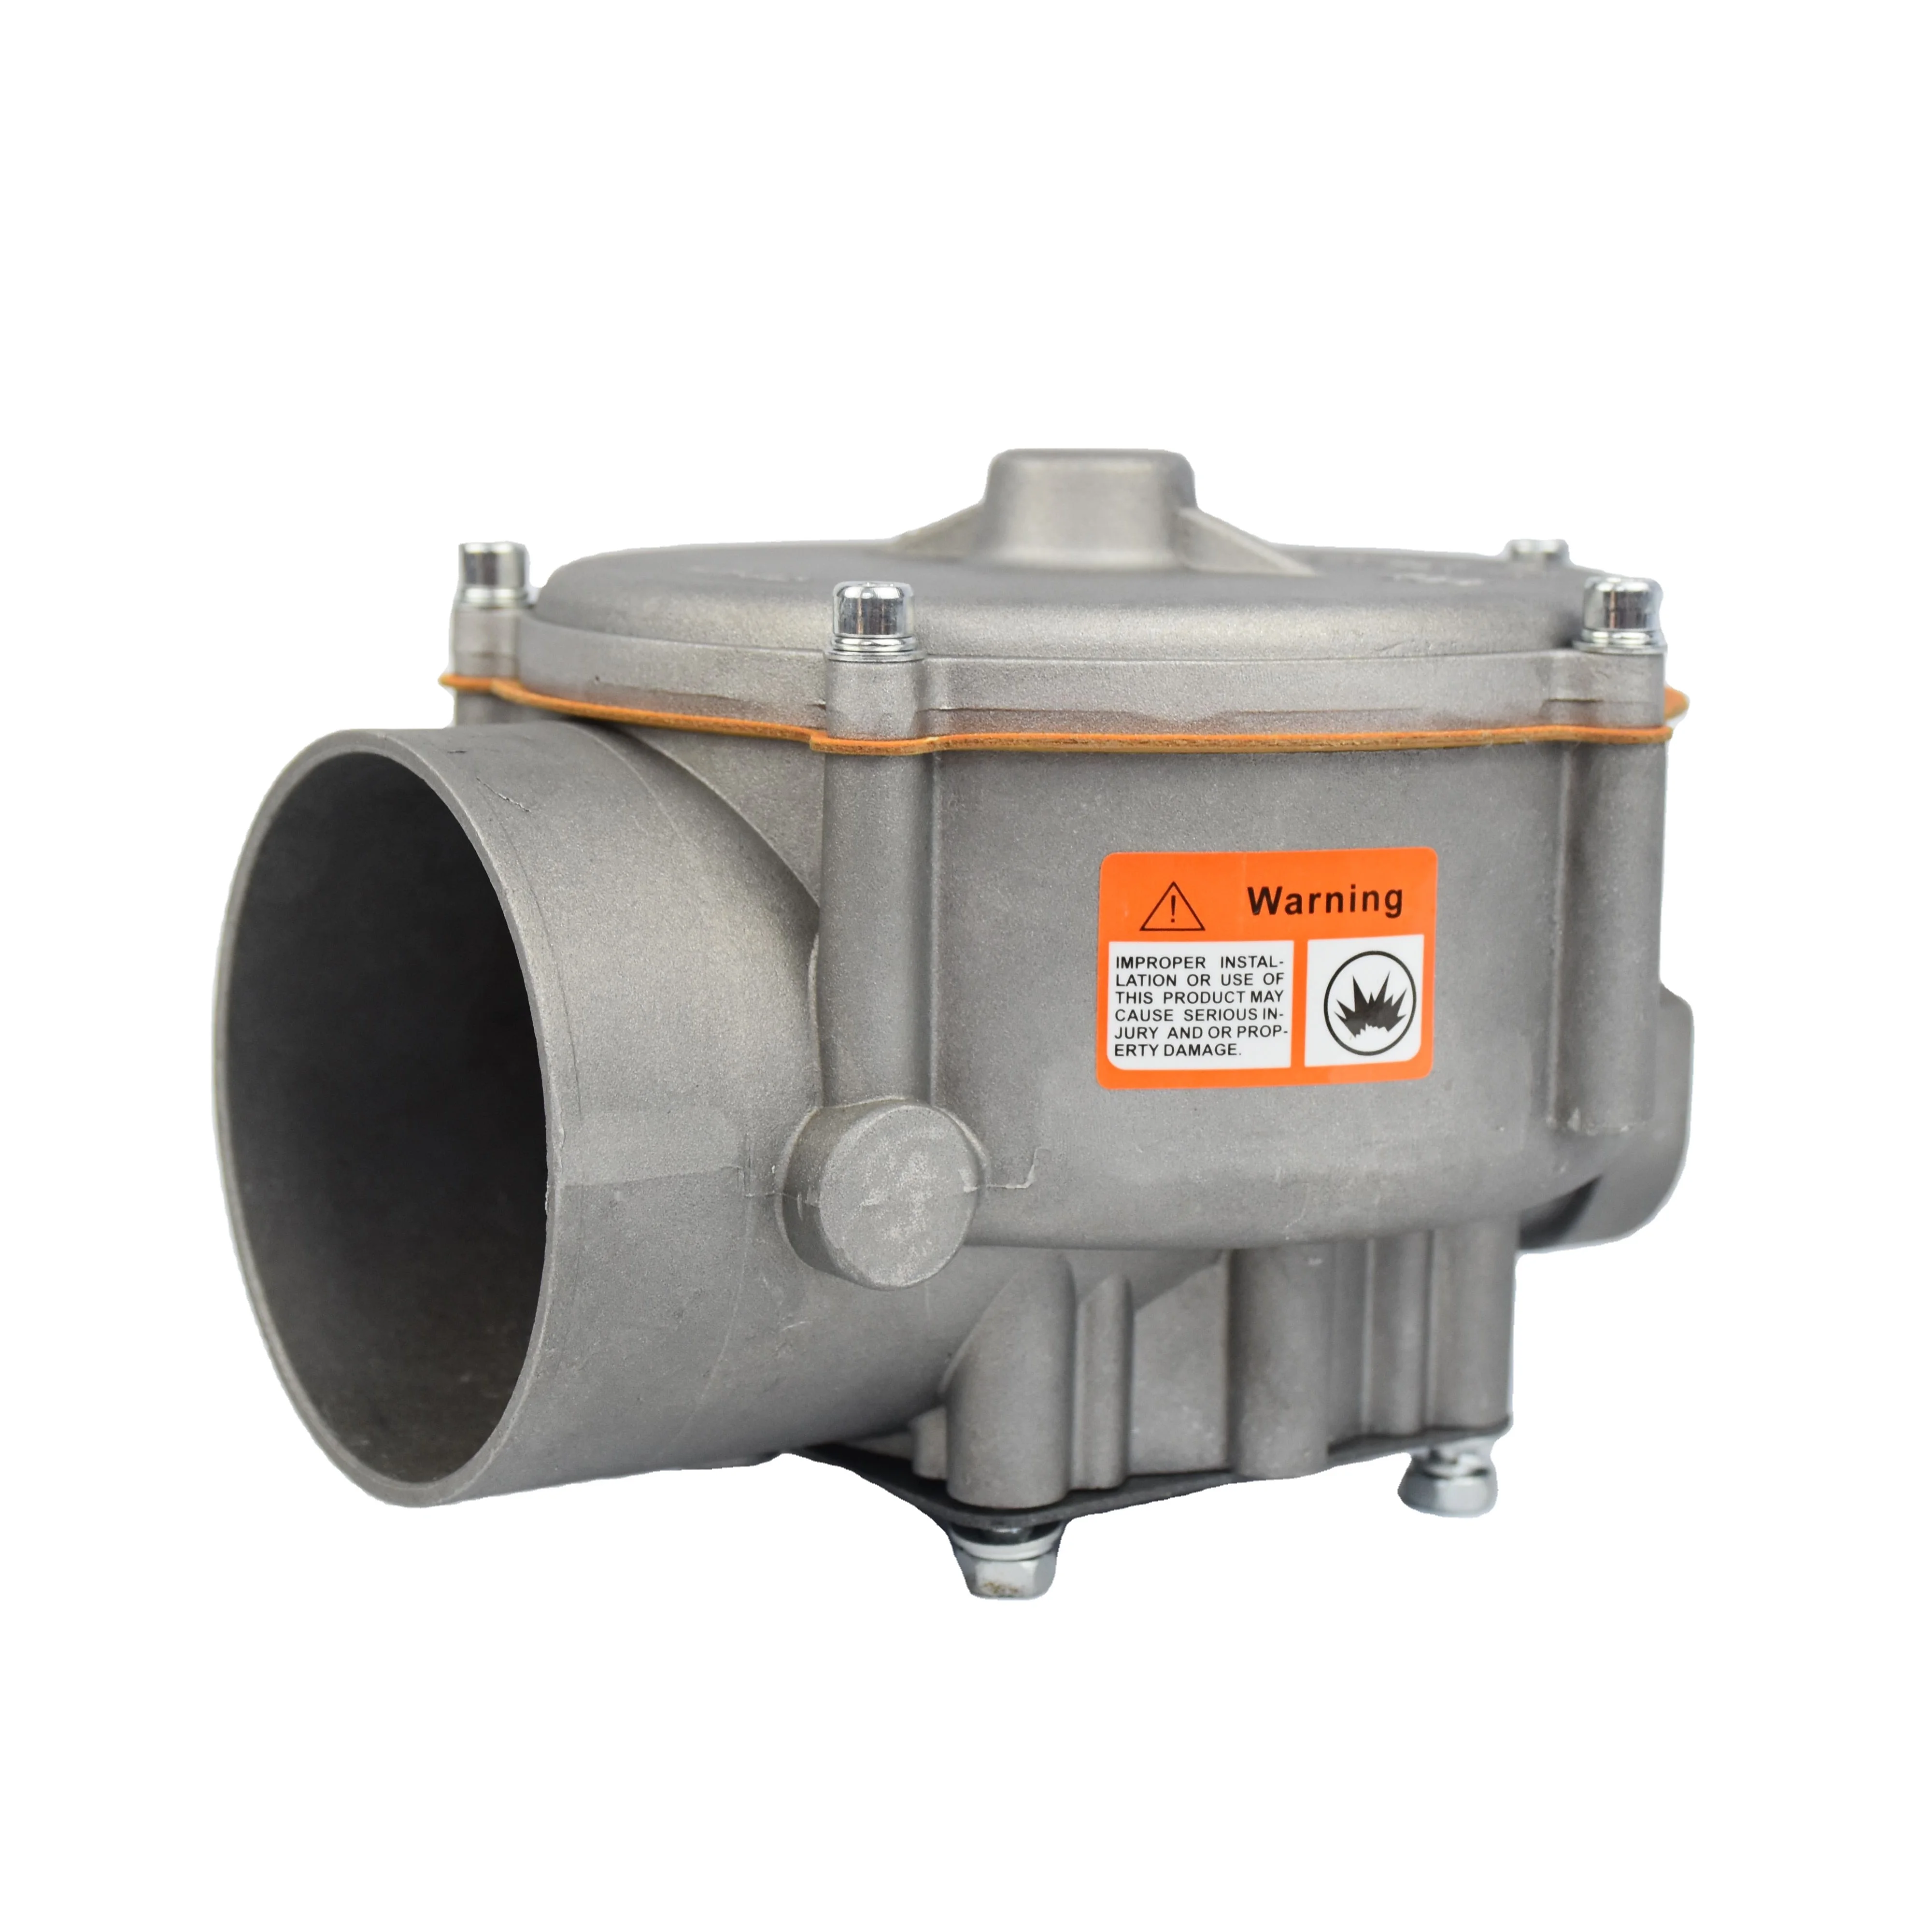 W150H gas mixer IMPCO 100 natural gas mixer engine generator 